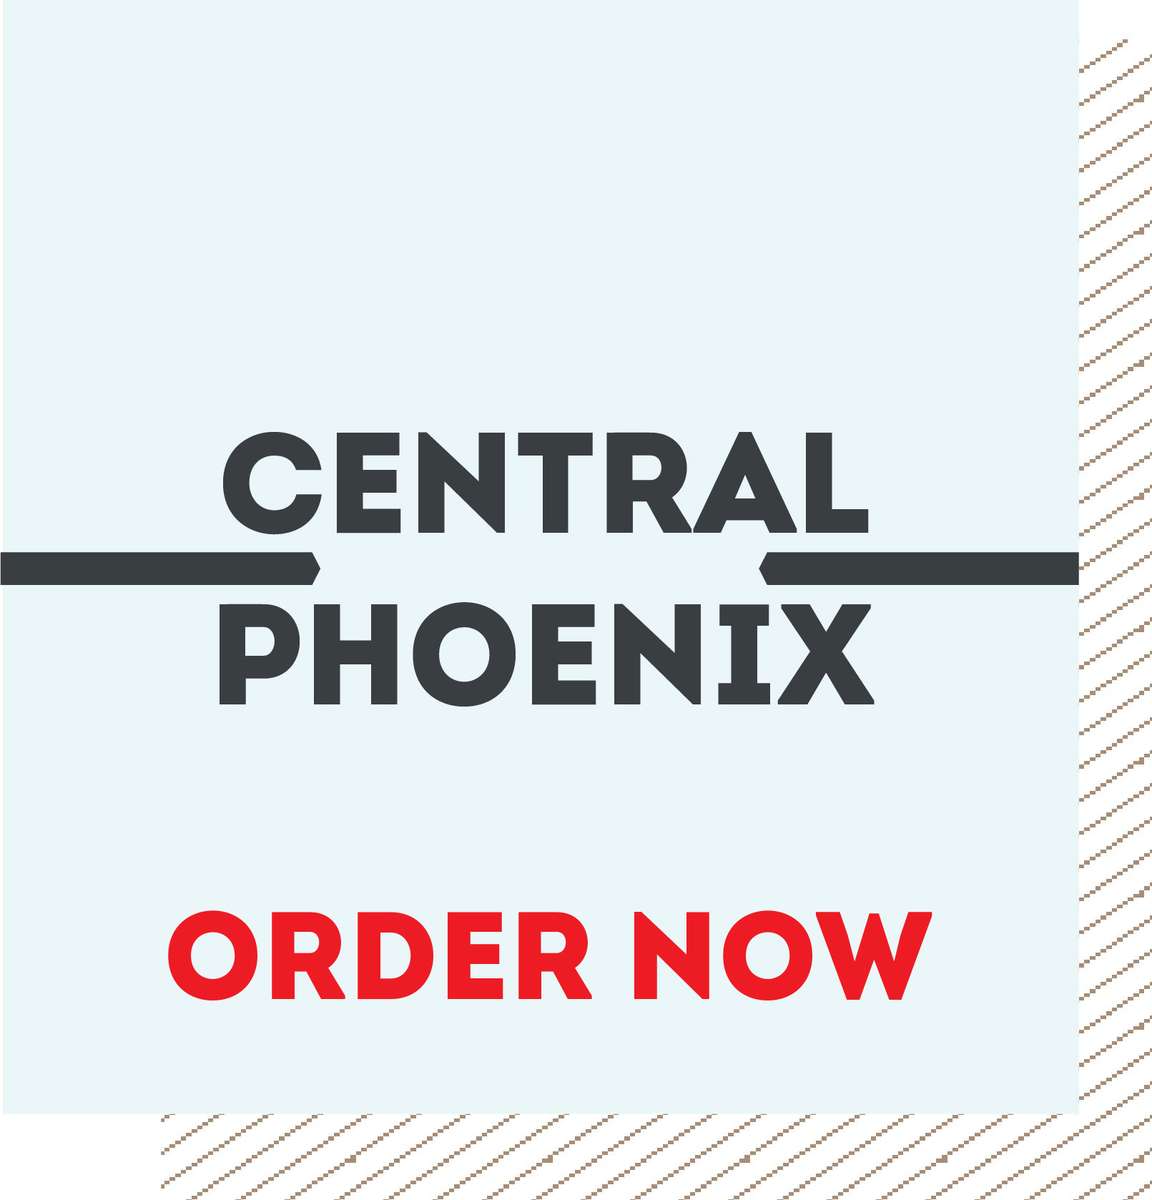 CENTRAL PHOENIX. Order now.